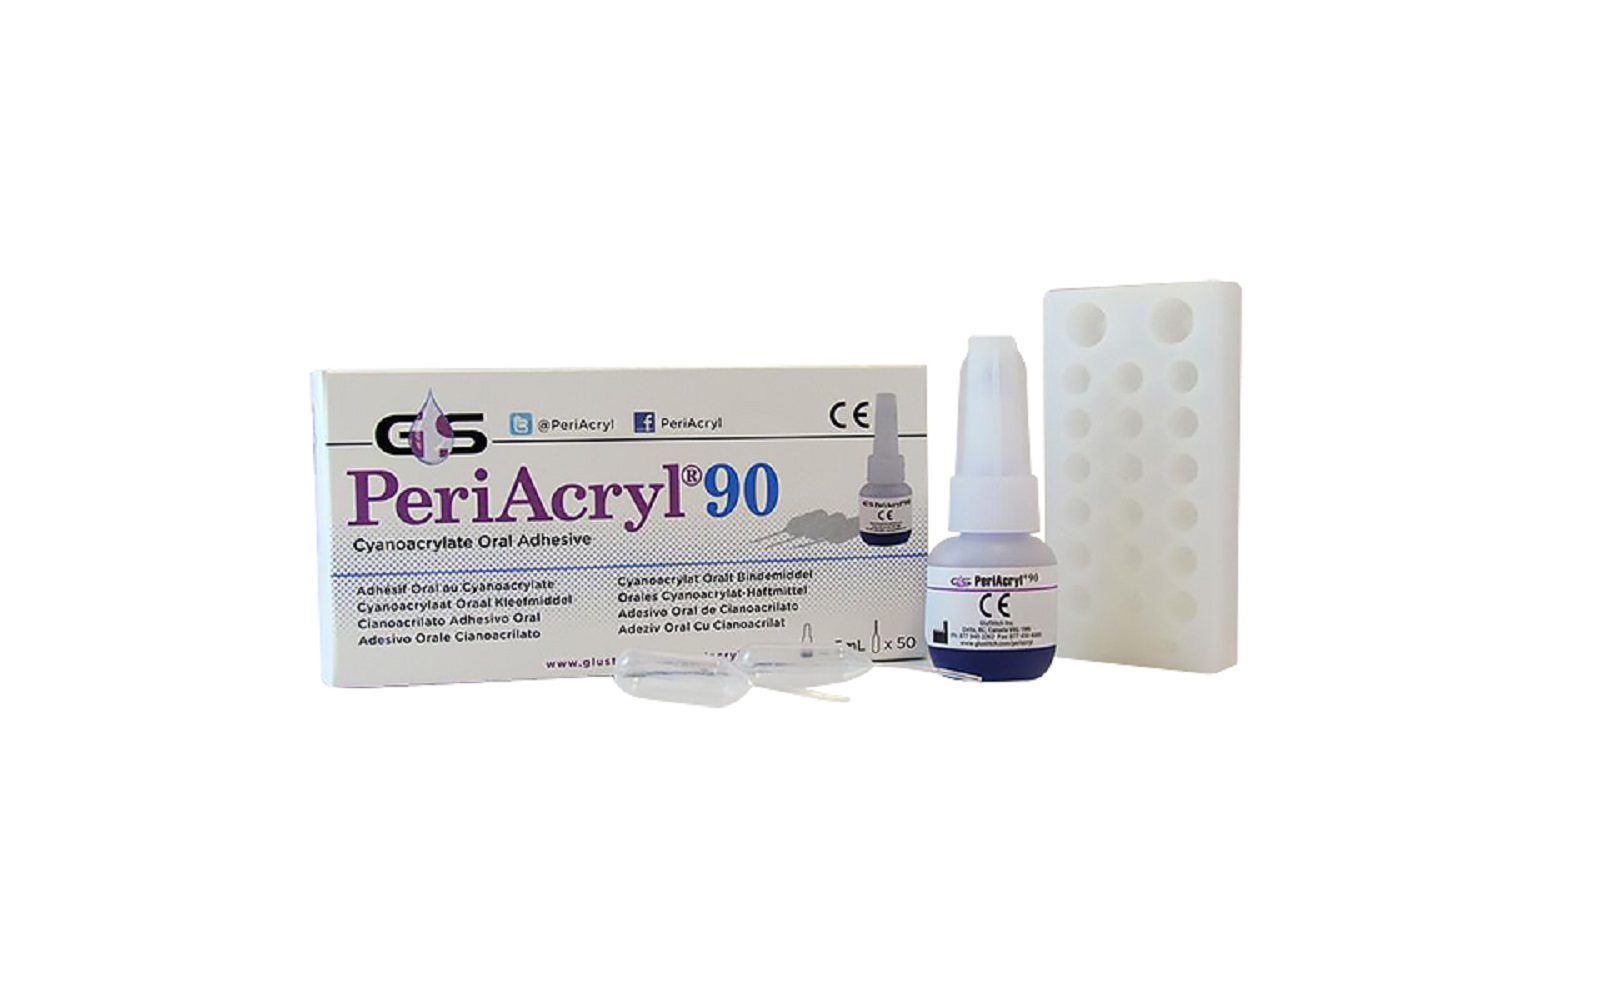 Periacryl periodontal tissue adhesive - multi-use kit. Violet color, regular